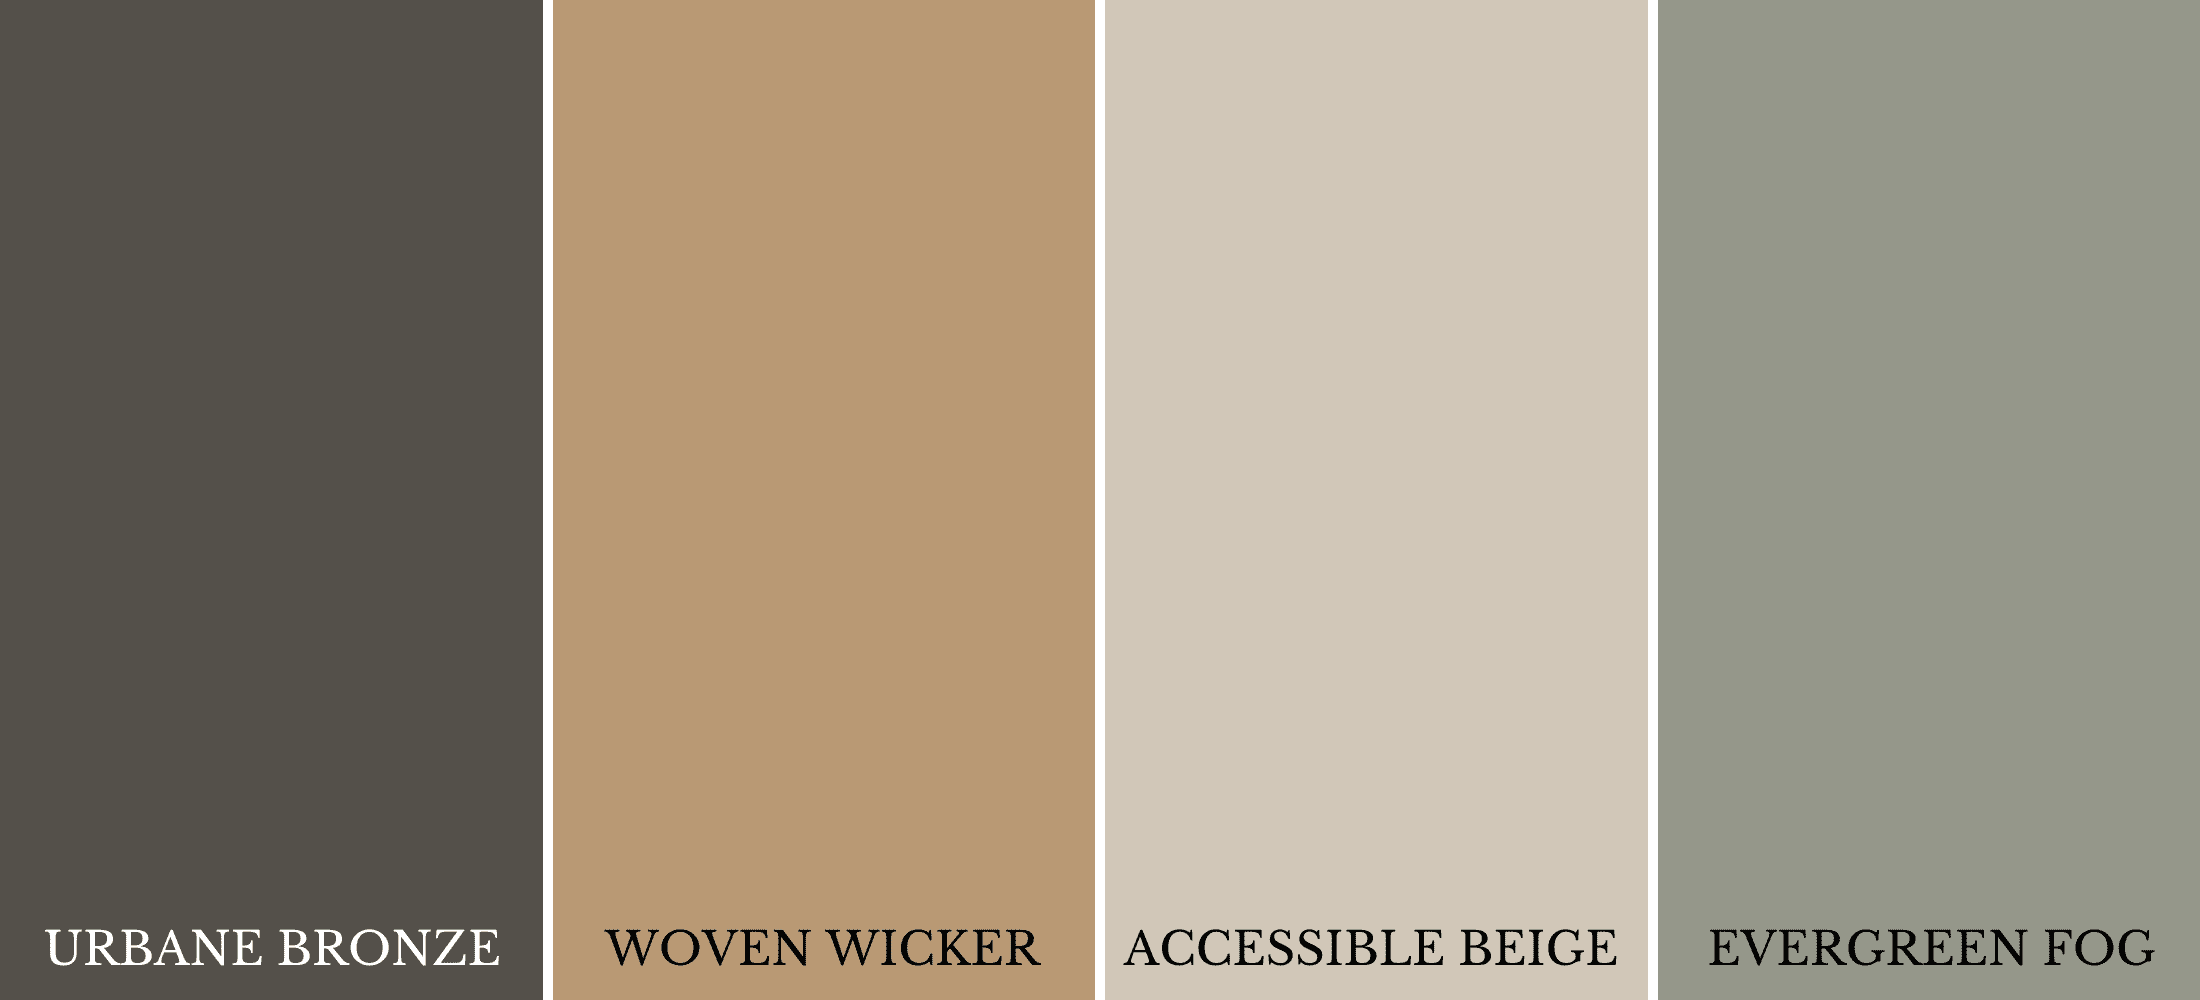 urbane bronze, woven wicker, accessible beige, evergreen fog